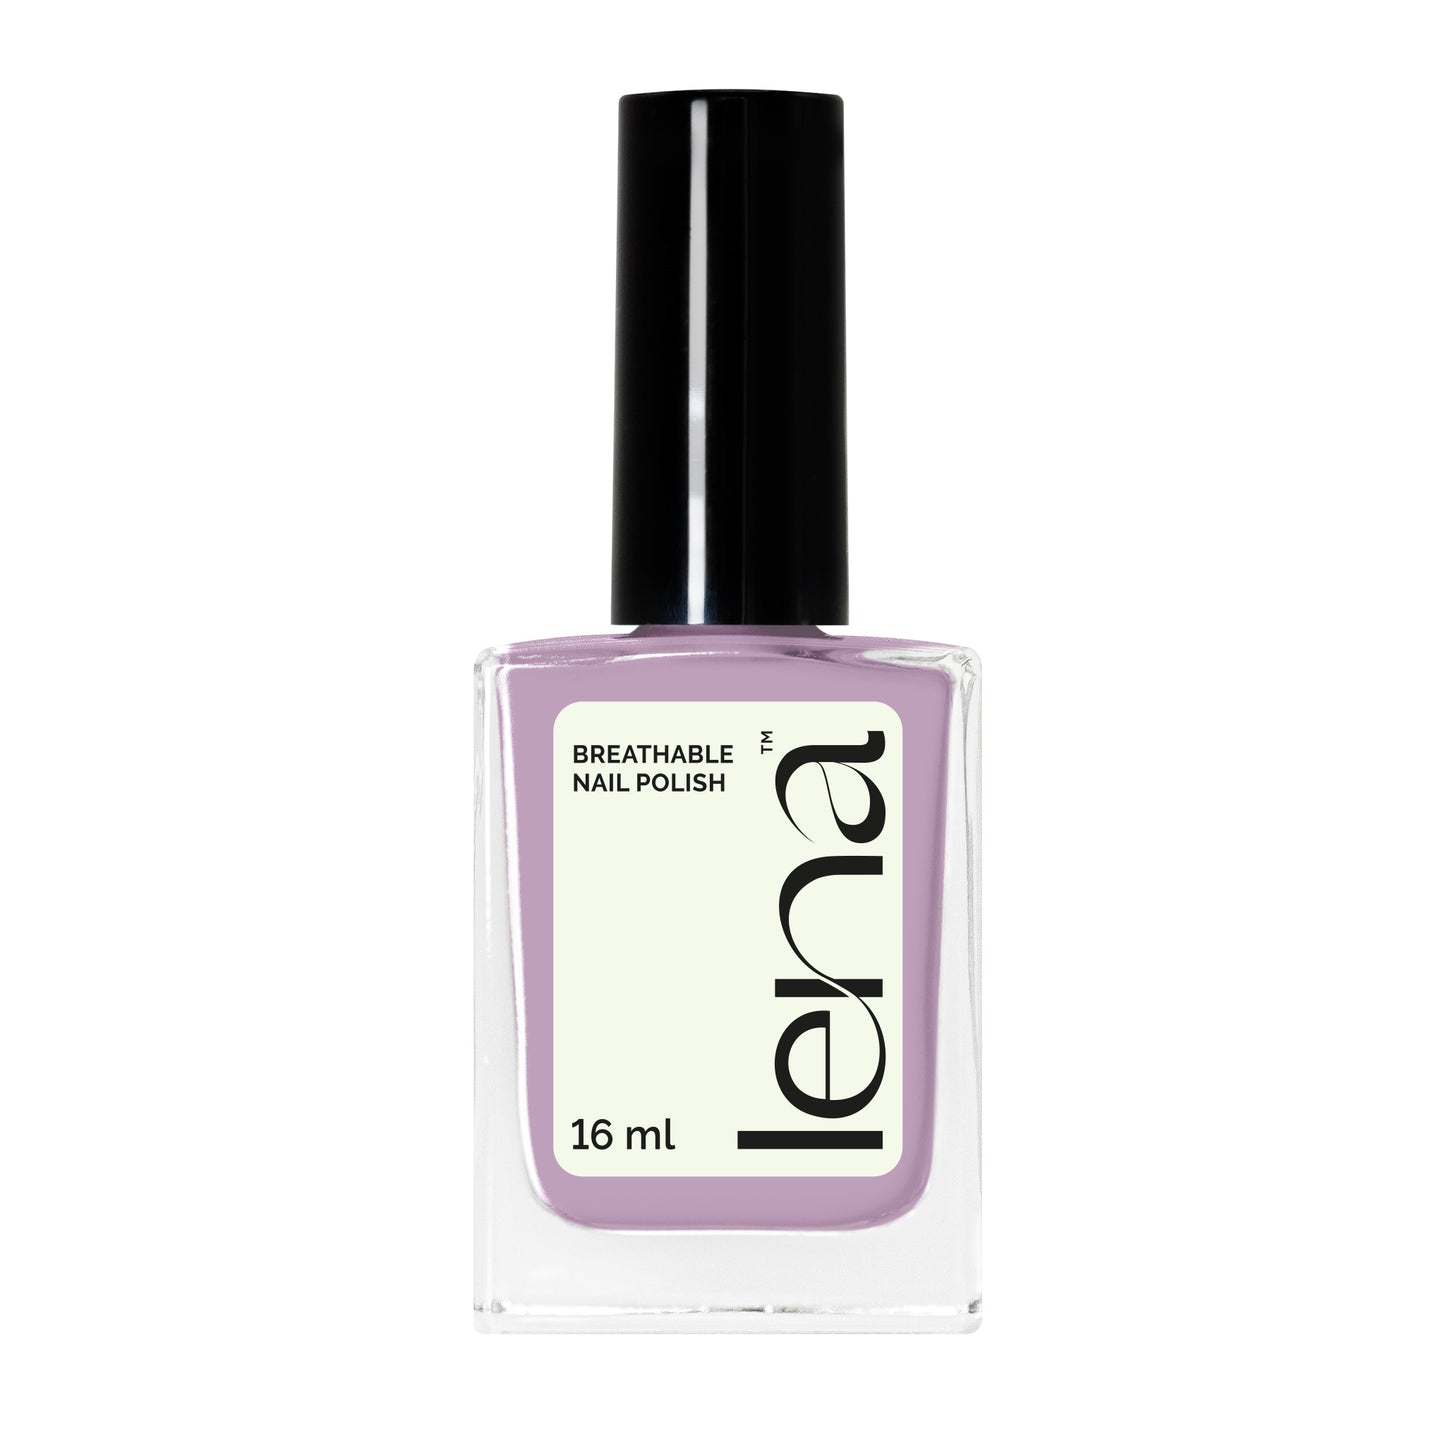 Breathable Halal Nail Polish - Lilac-quer - LE154 by LENA